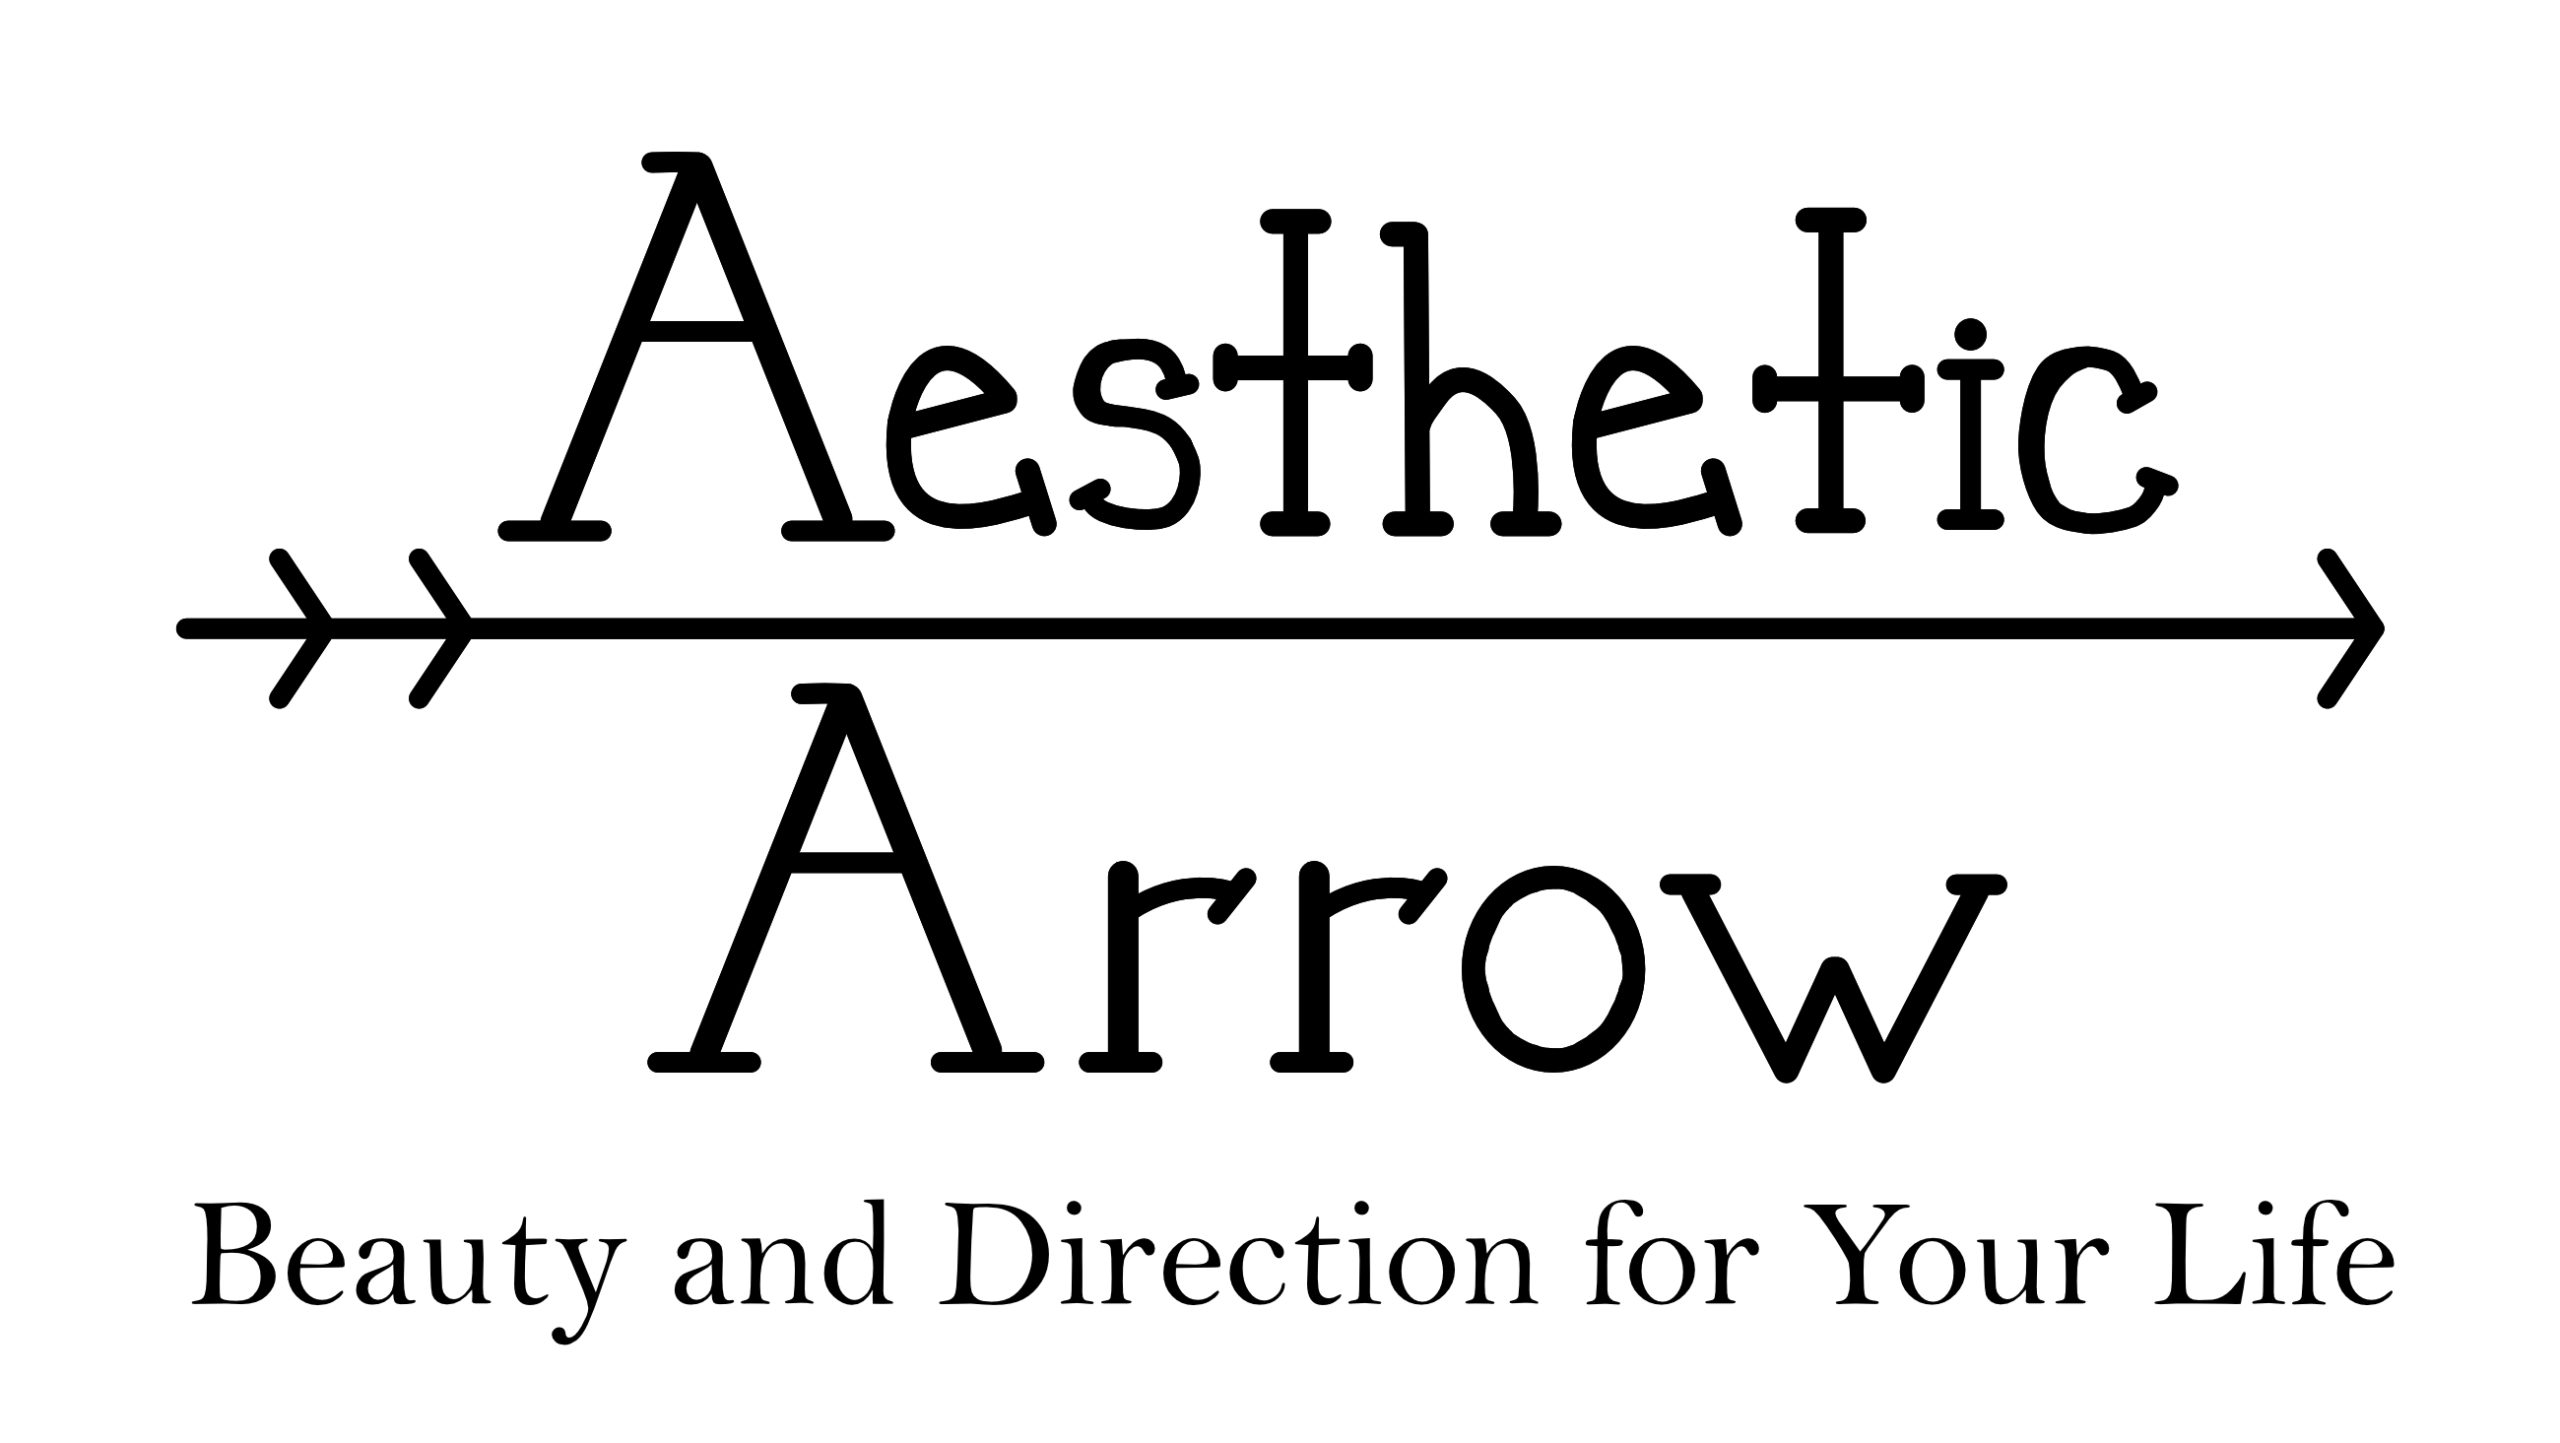 Aesthetic Arrow Logo and Tagline